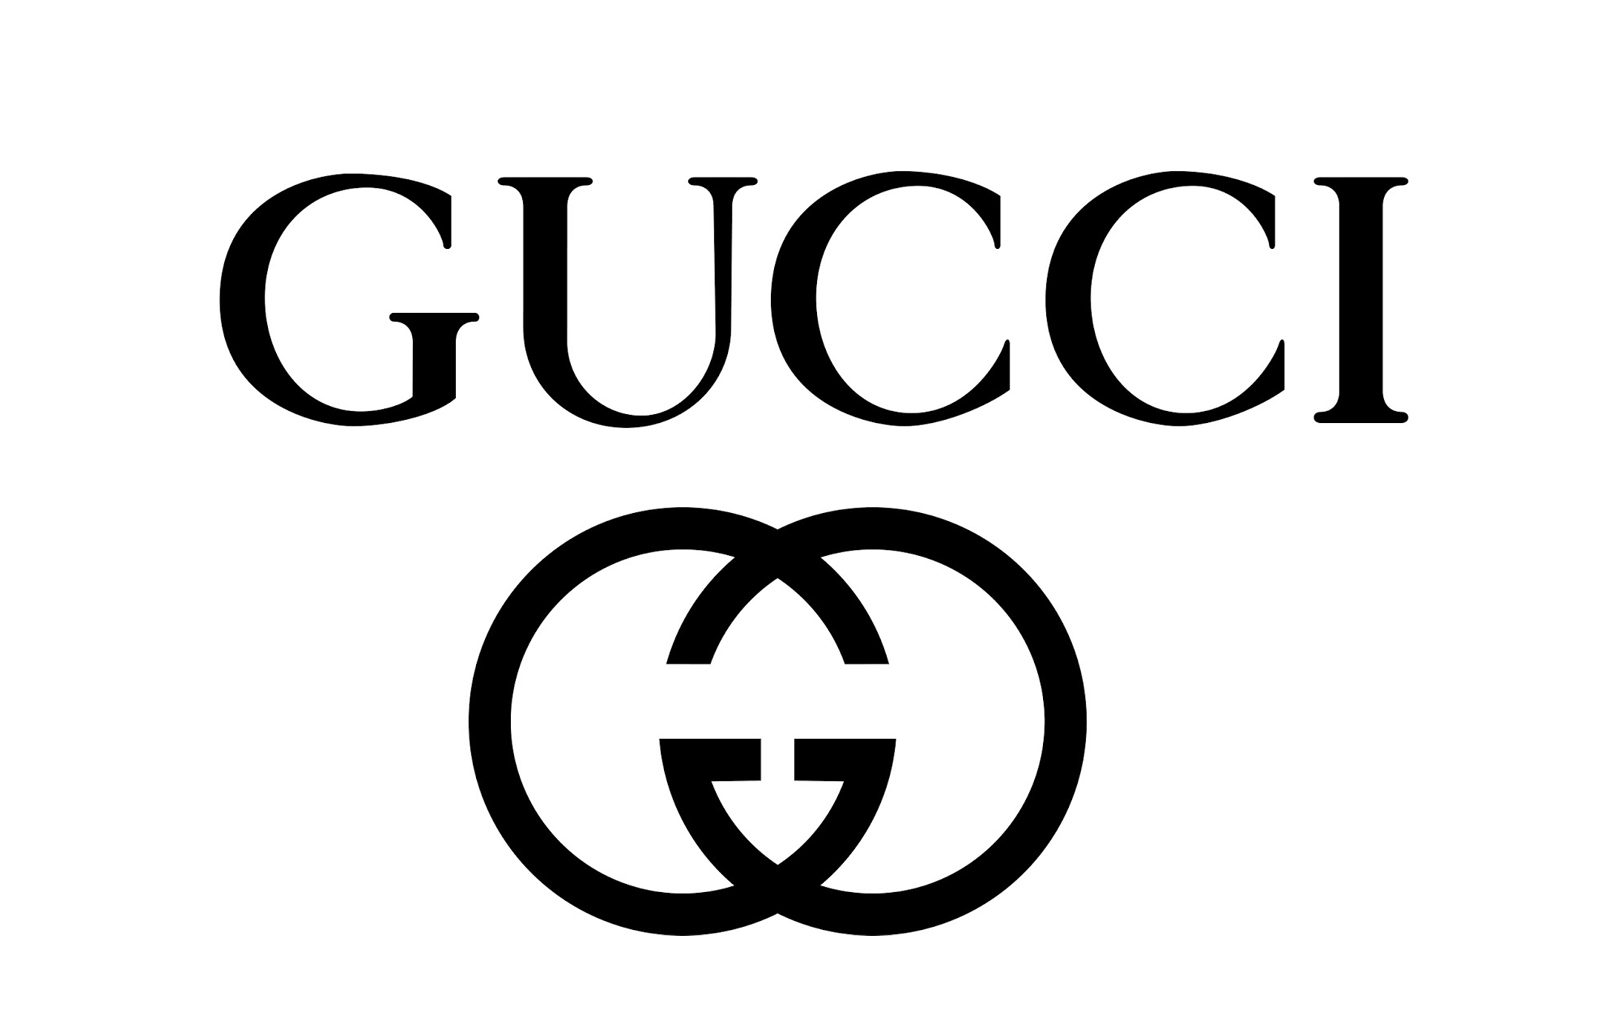 italian fashion brand logos